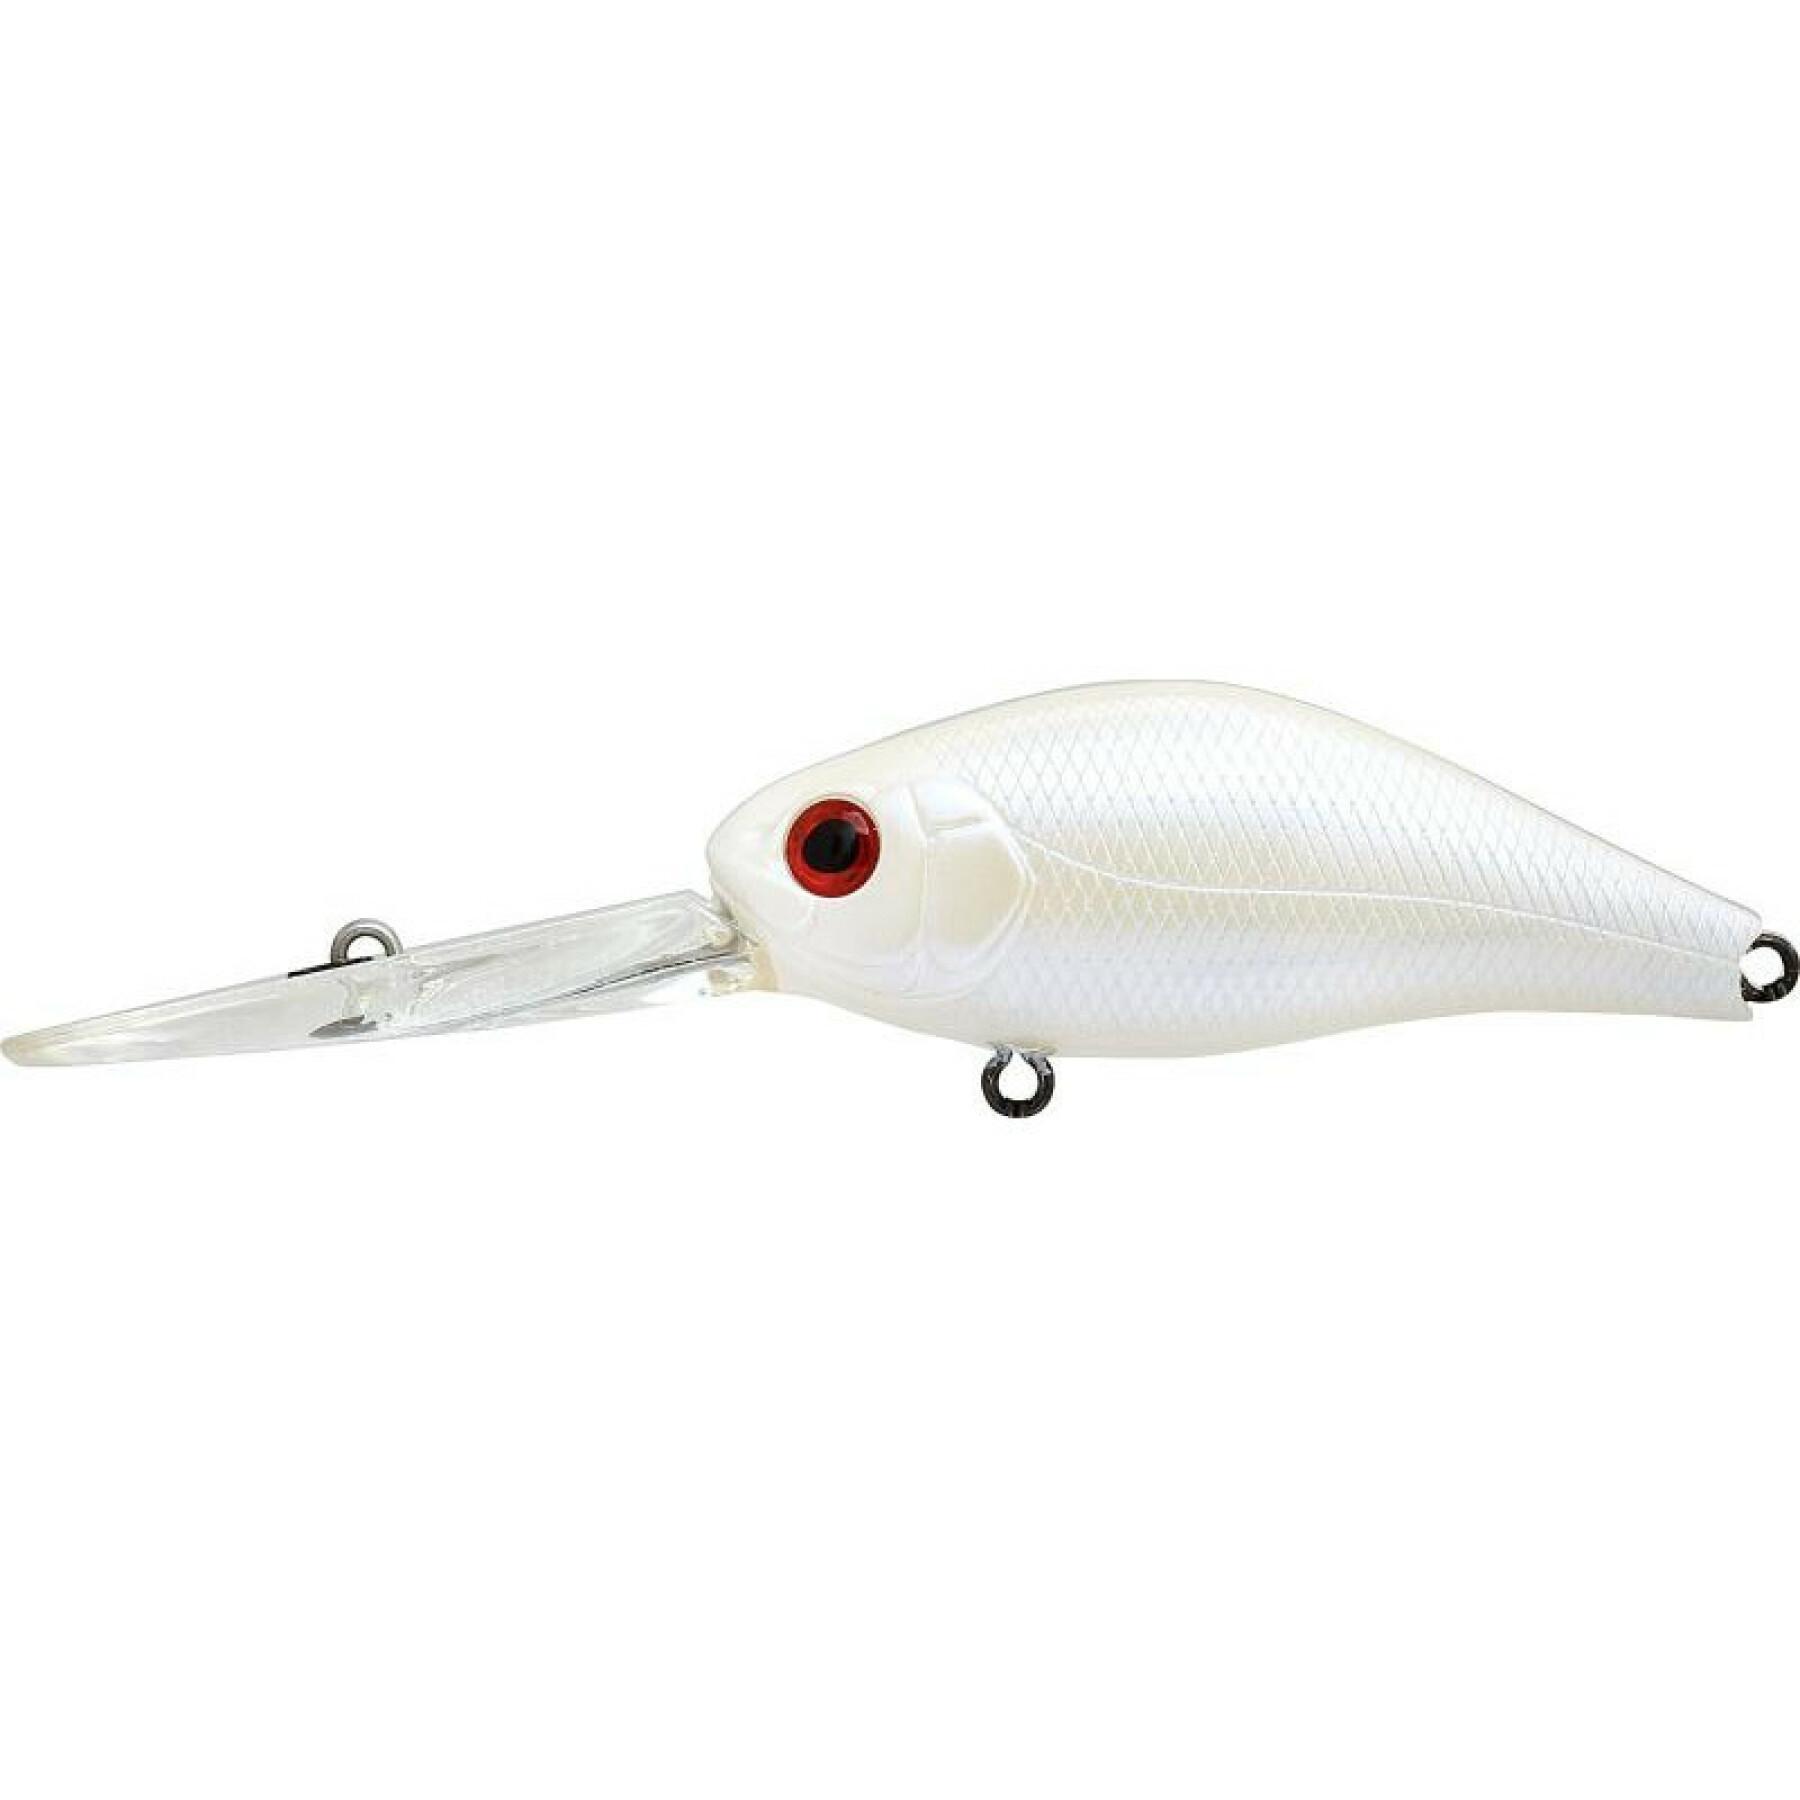 Lure Zip Baits B Switcher Midger Silent MDR 7g - Hard lures - Predator -  Fishing